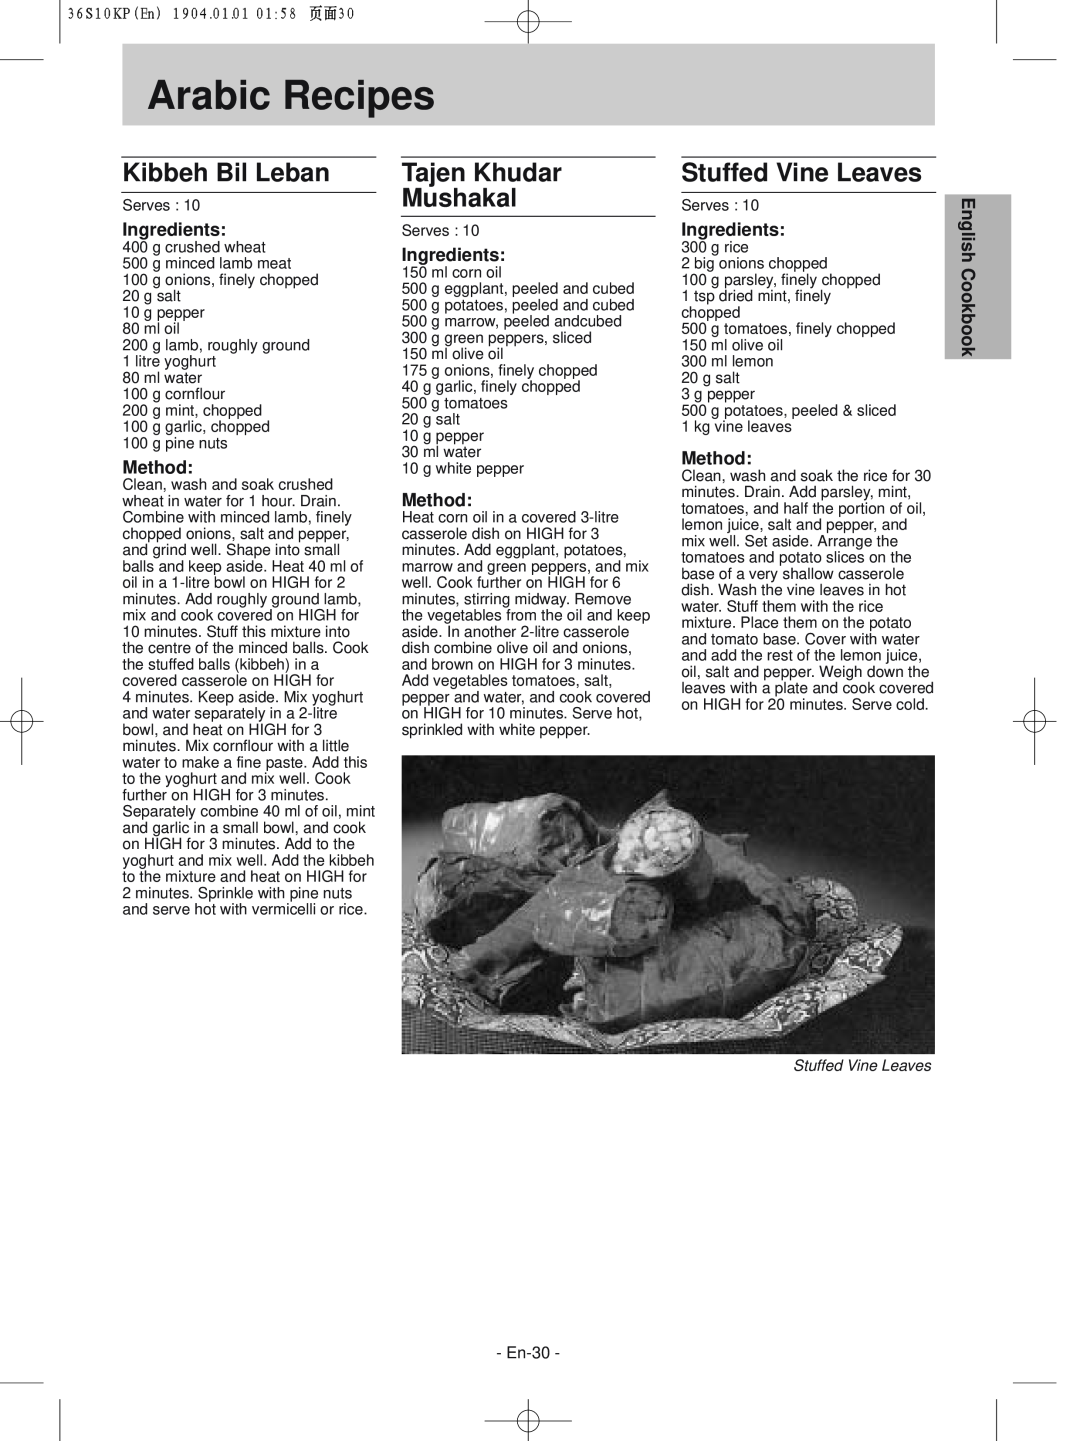 Panasonic NN-S215WF, NN-S235WF manual Kibbeh Bil Leban, Tajen Khudar Mushakal, Stuffed Vine Leaves, Arabic Recipes, En-30 